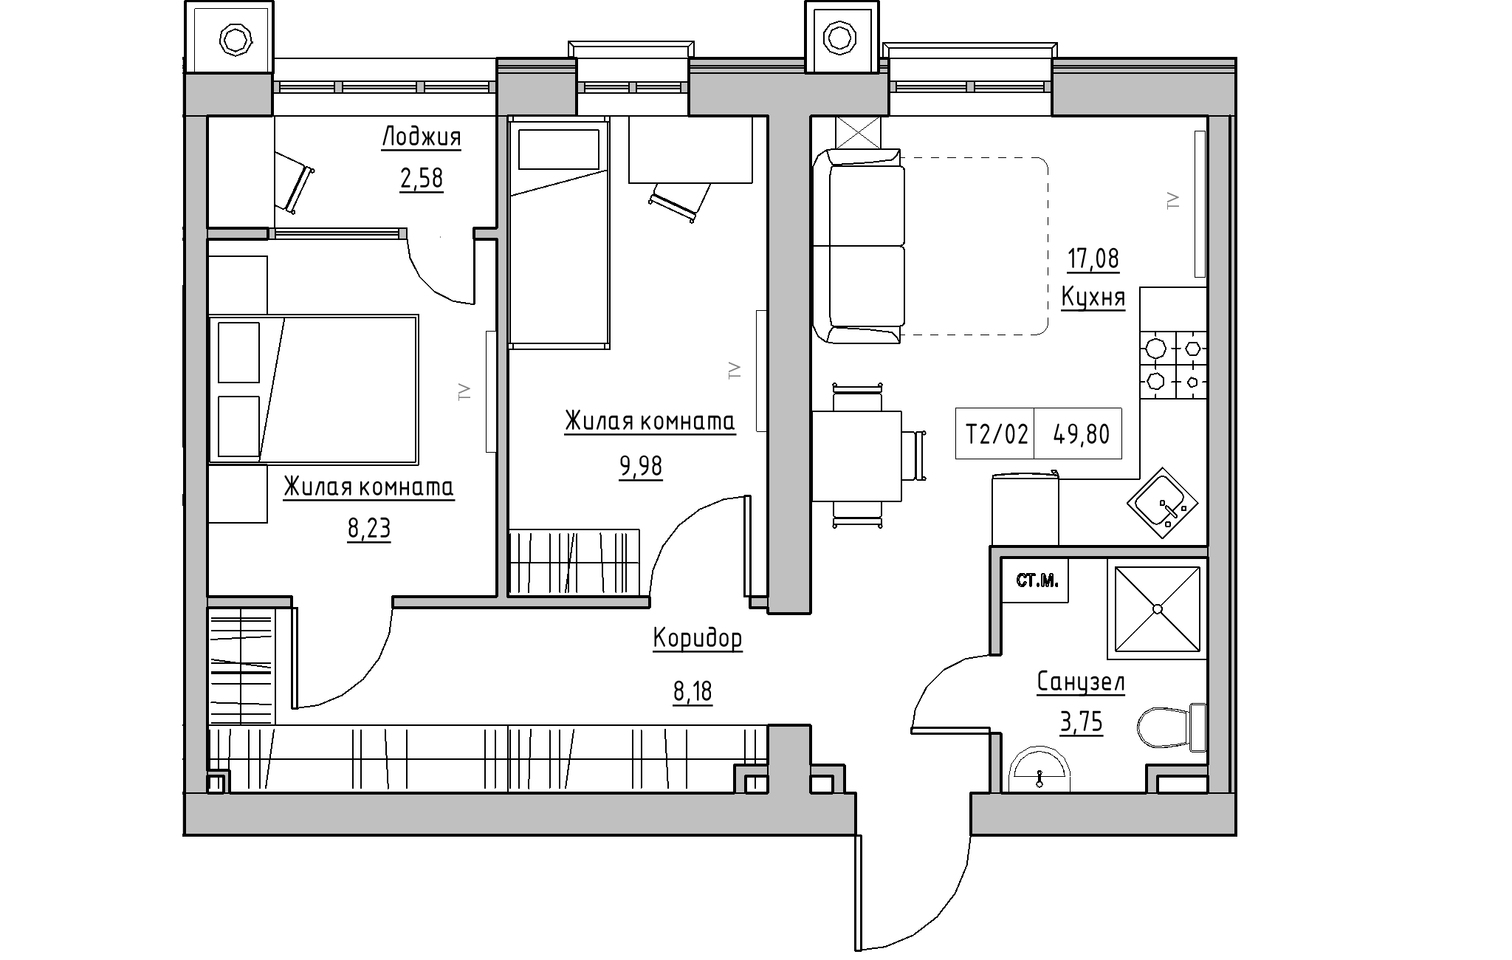 Planning 2-rm flats area 49.8m2, KS-010-01/0007.